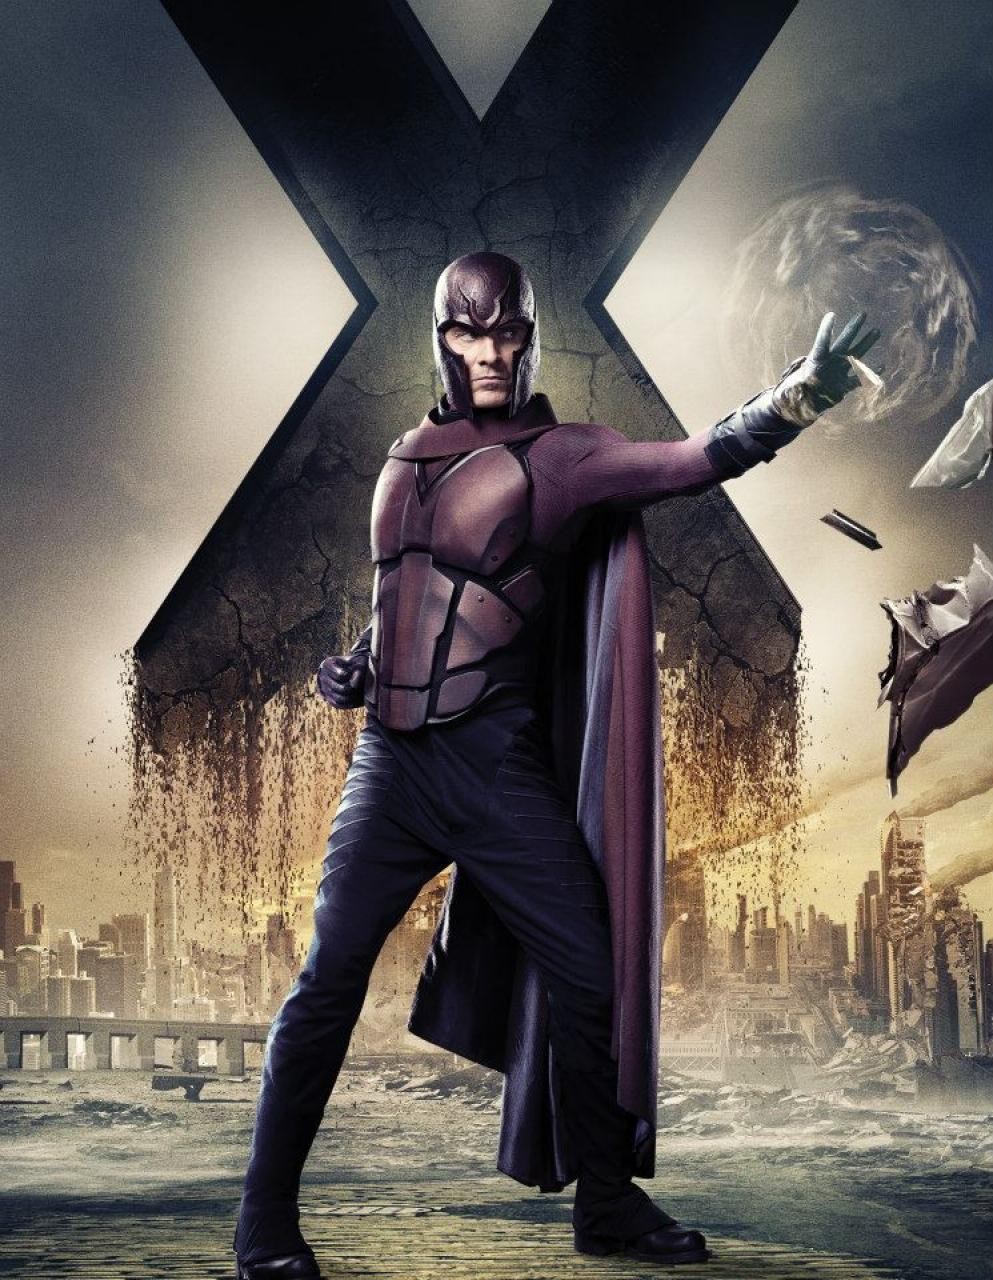 Michael Fassbender stars as Erik Lehnsherr/Magneto 20th Century Fox's X-Men: Days of Future Past (2014)